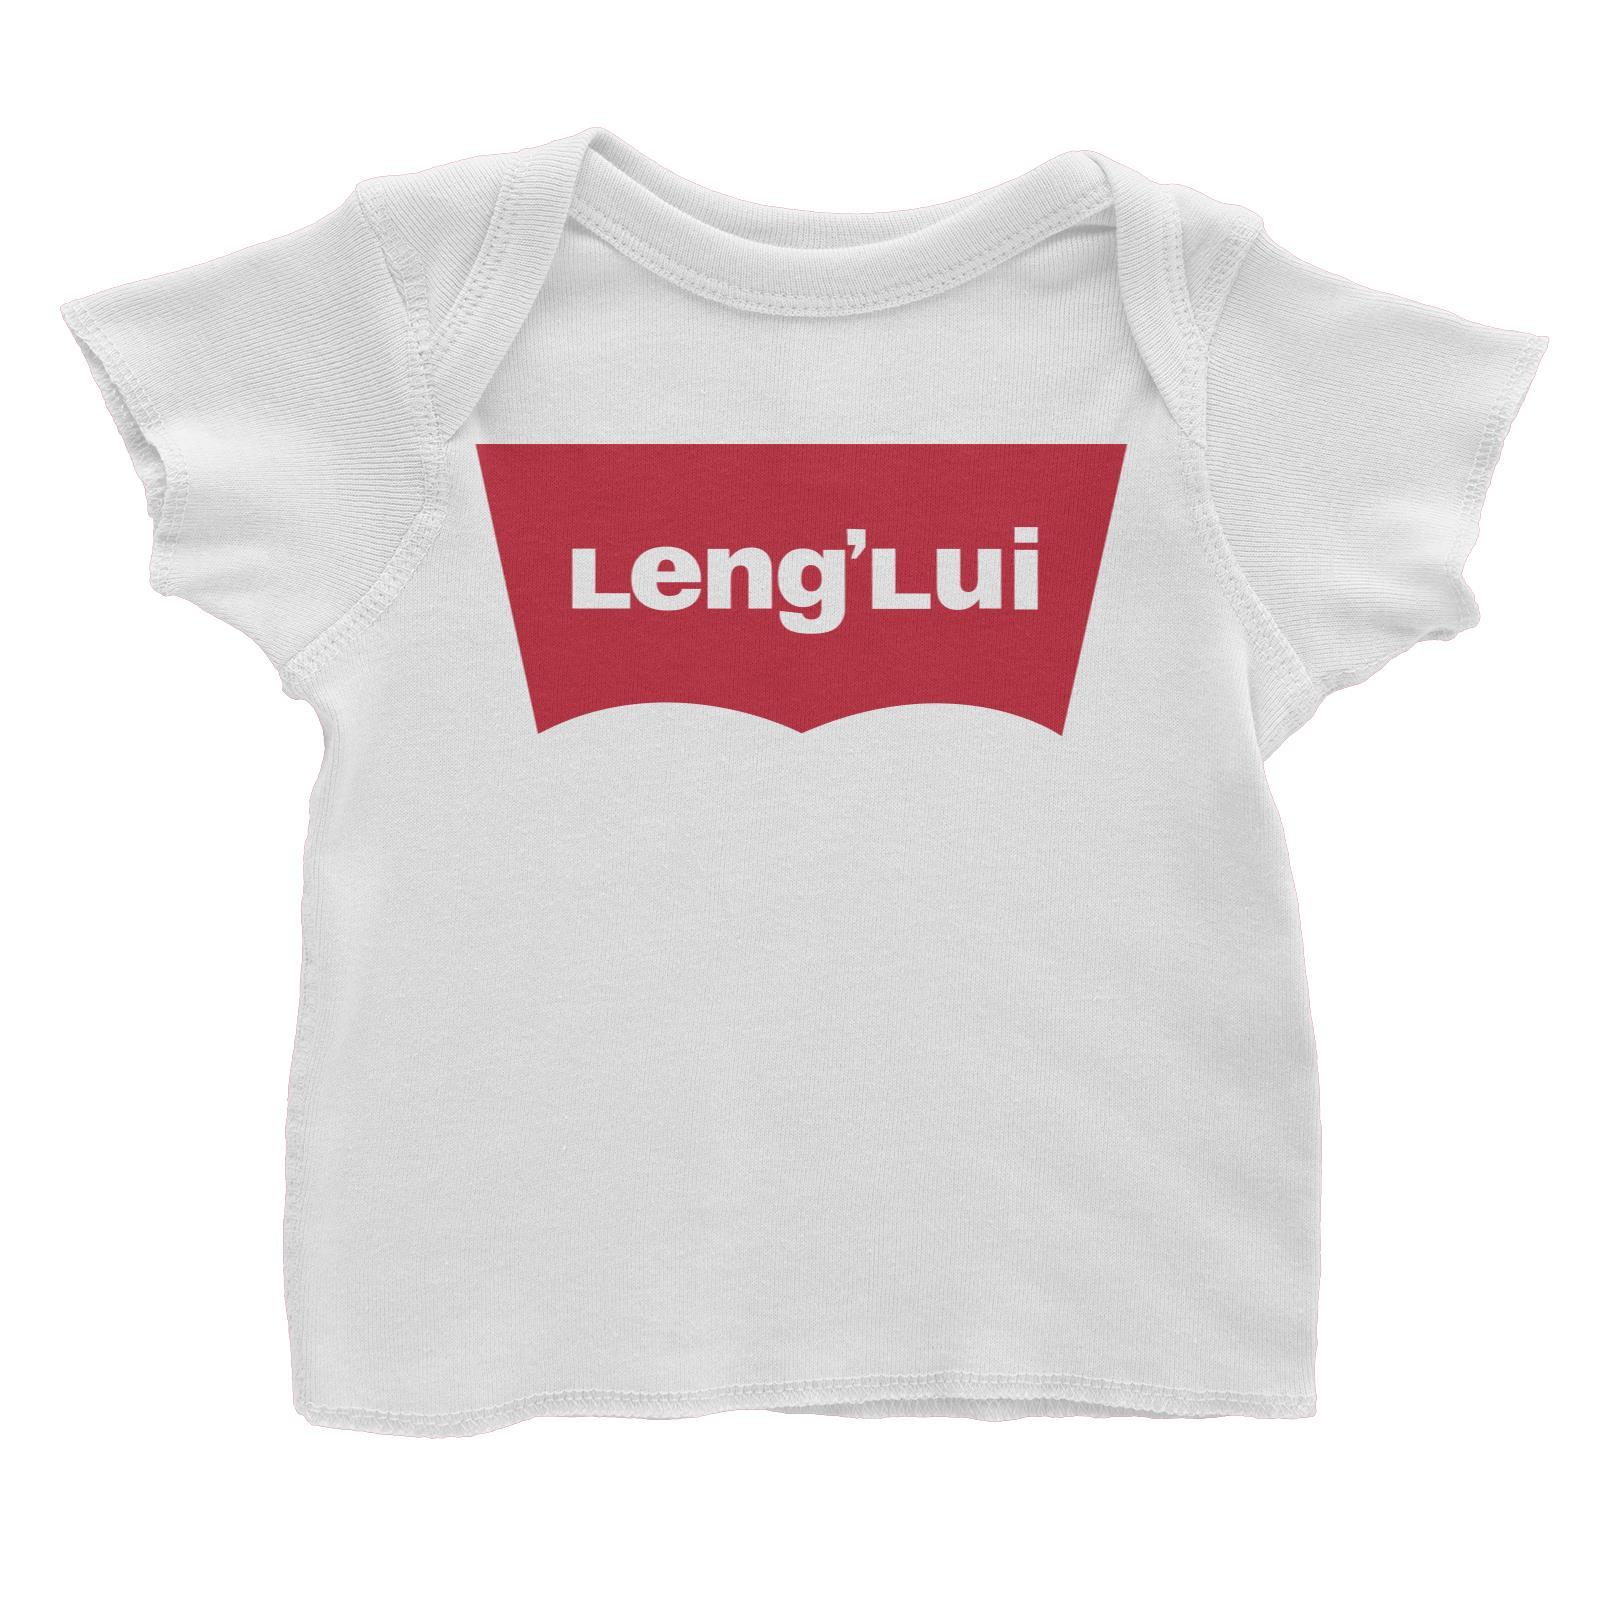 Slang Statement Lenglui Baby T-Shirt